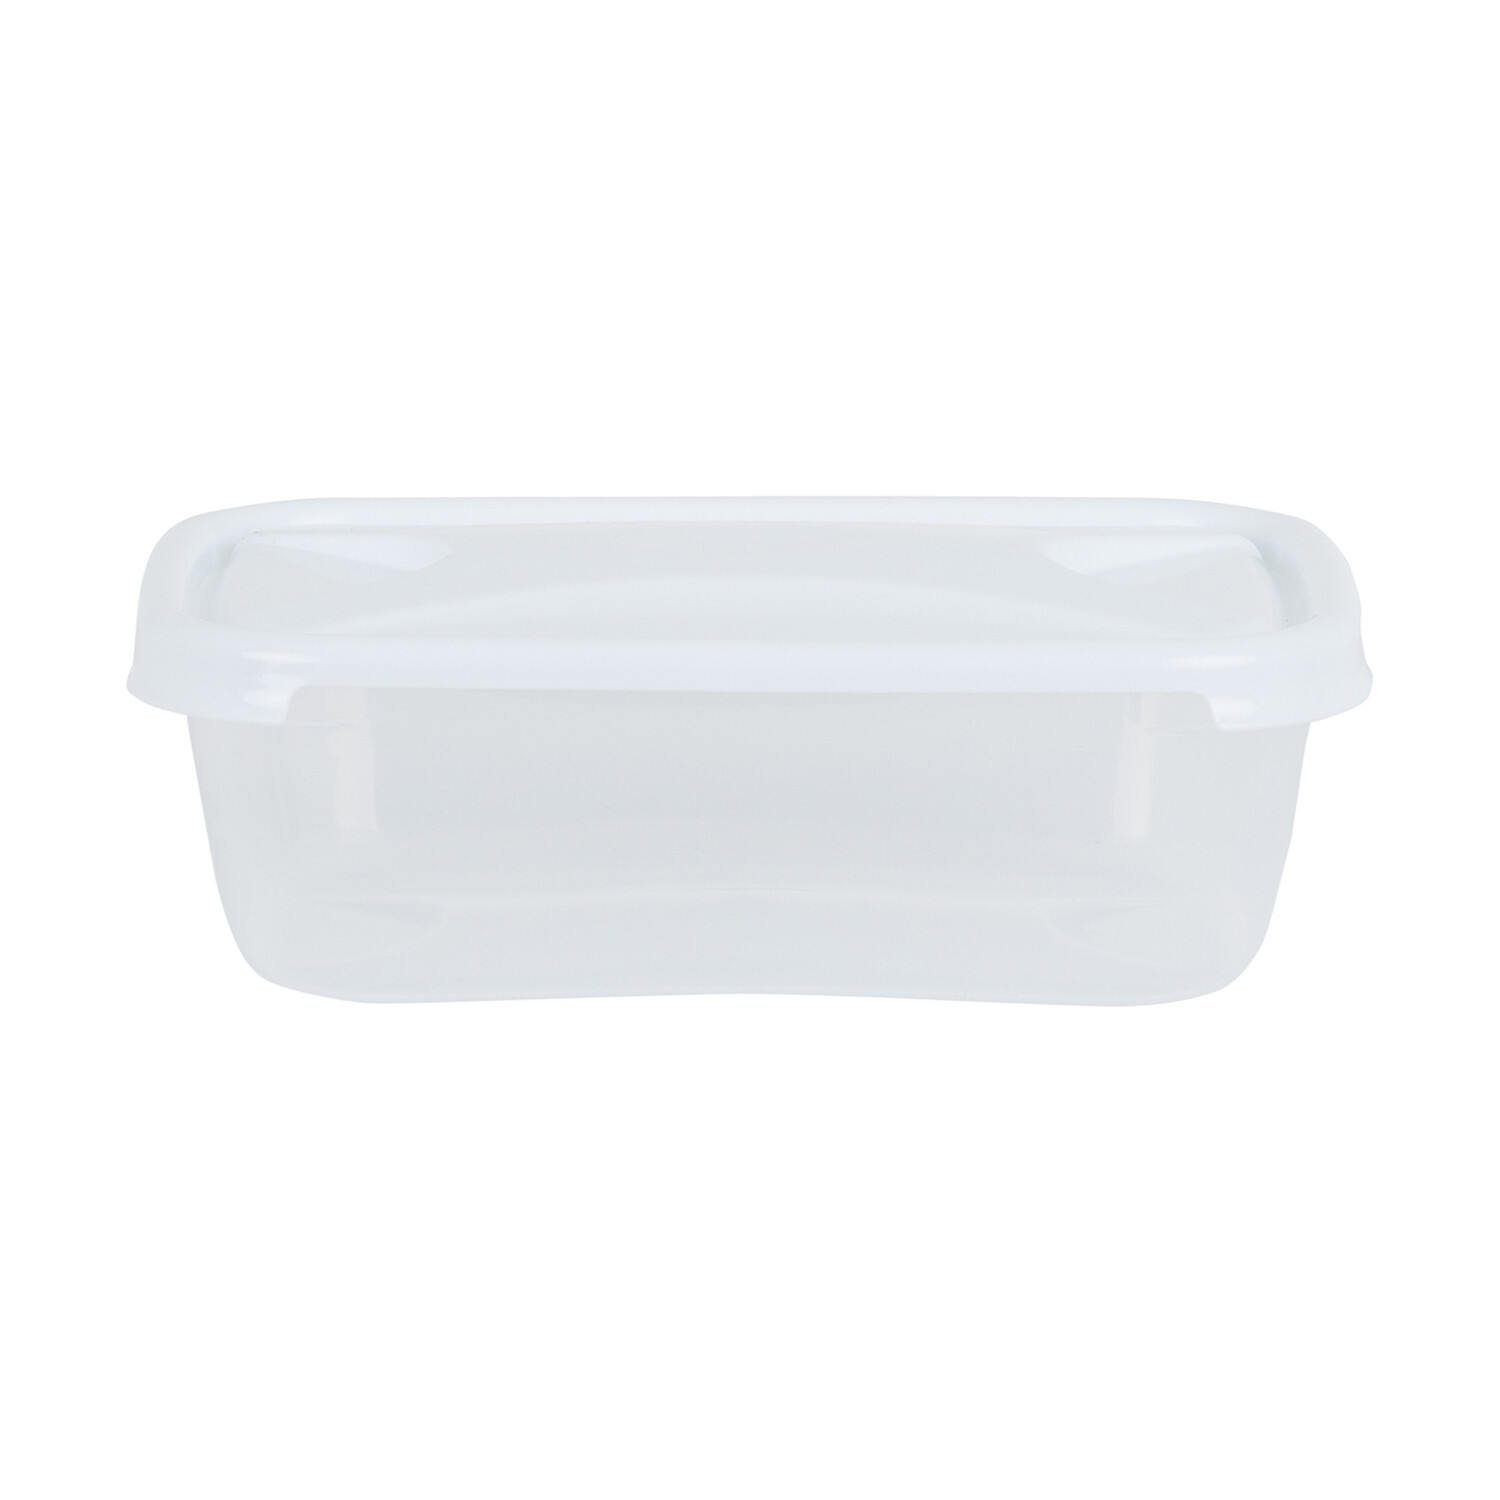 Wham Rectangular Food Box With Lid - White / 1.6l Image 1